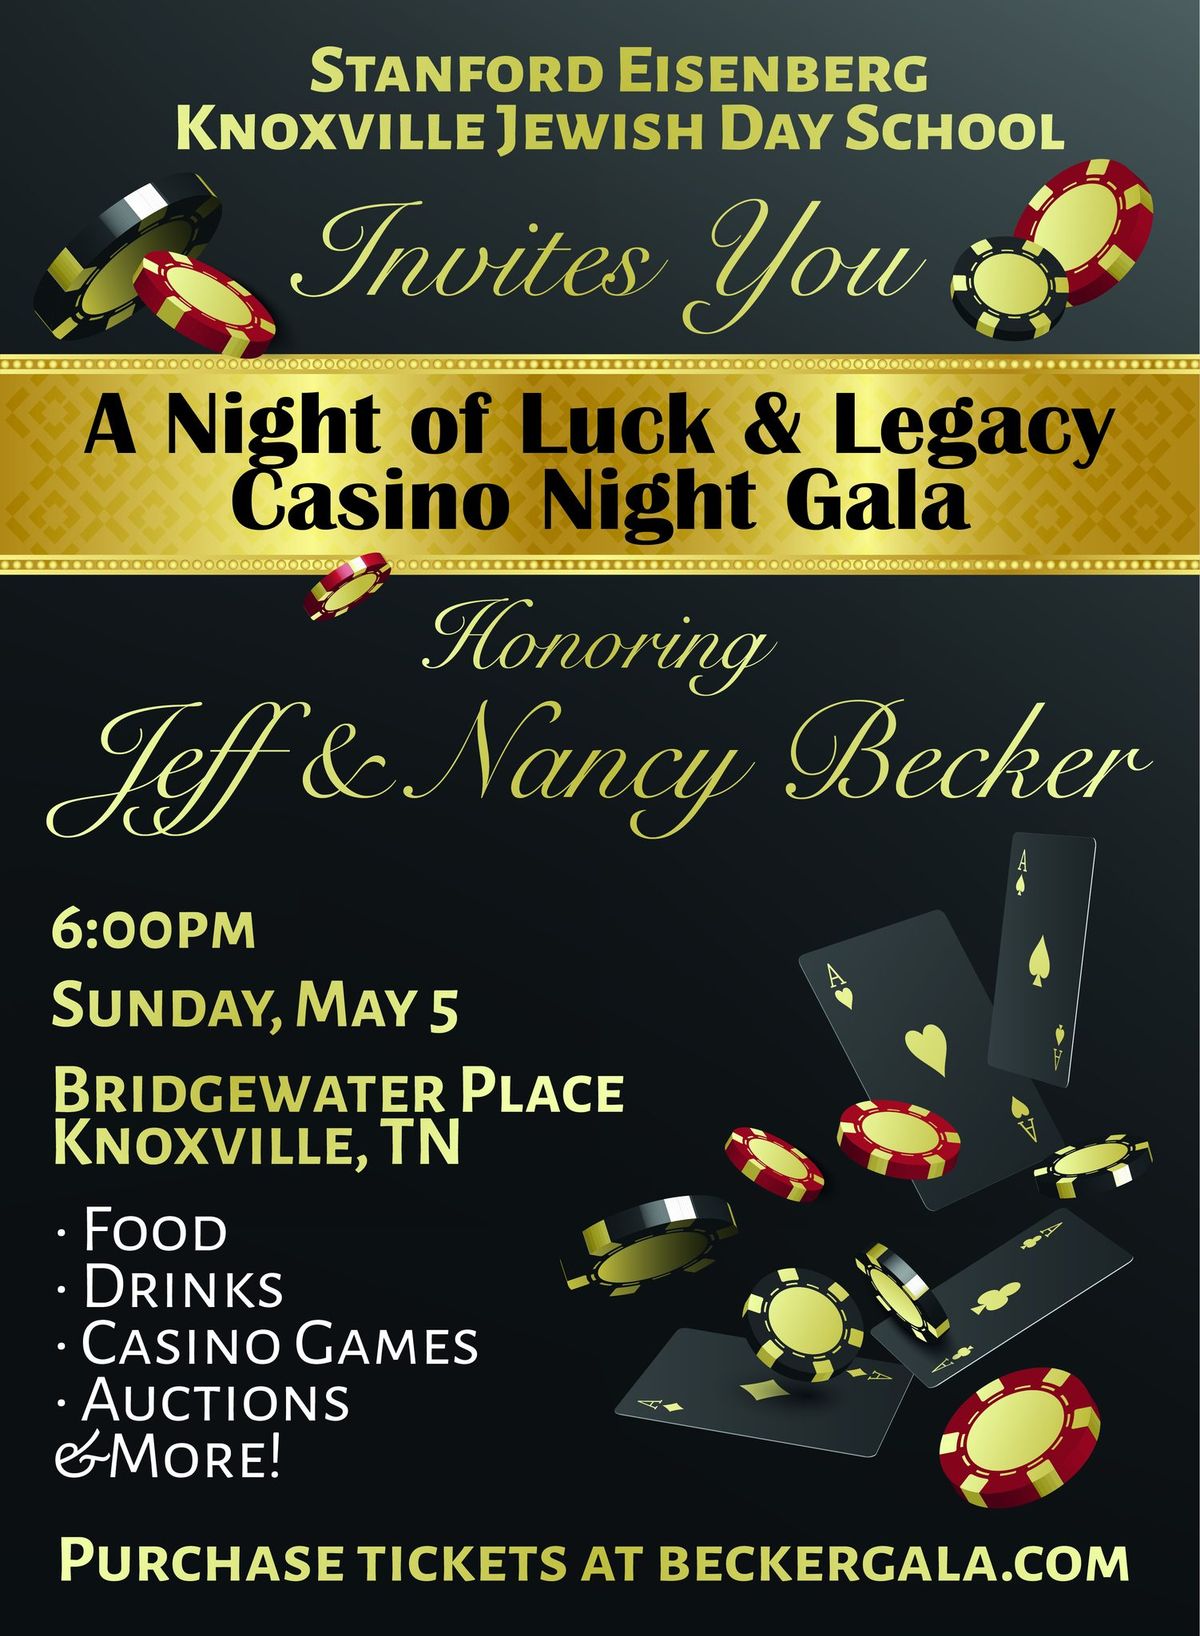 A Night of Luck & Legacy Casino Night Gala